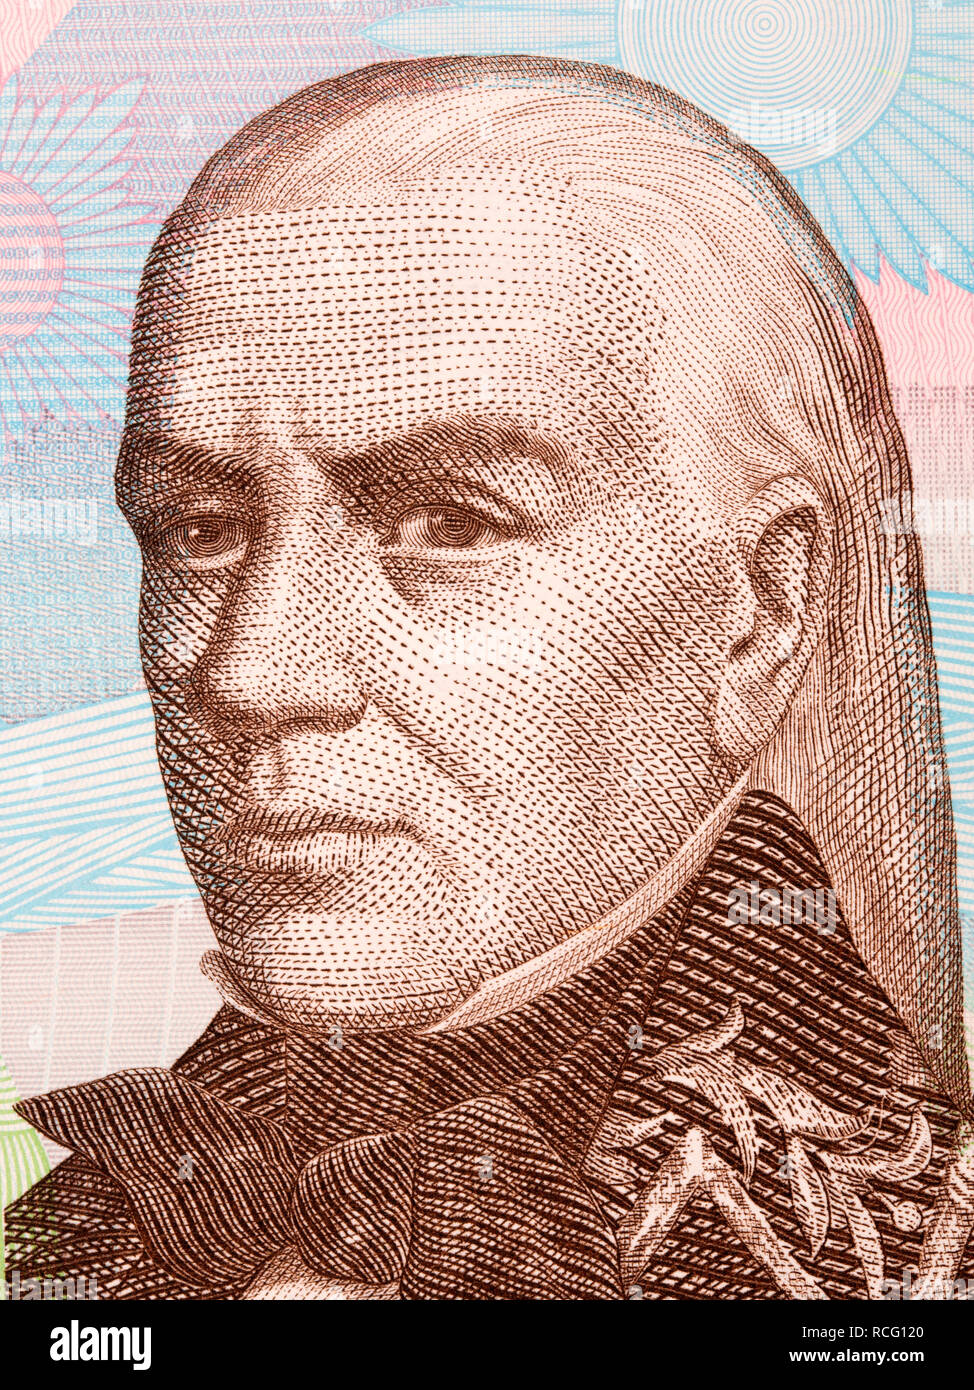 Francisco de Miranda portrait from Venezuelan money Stock Photo